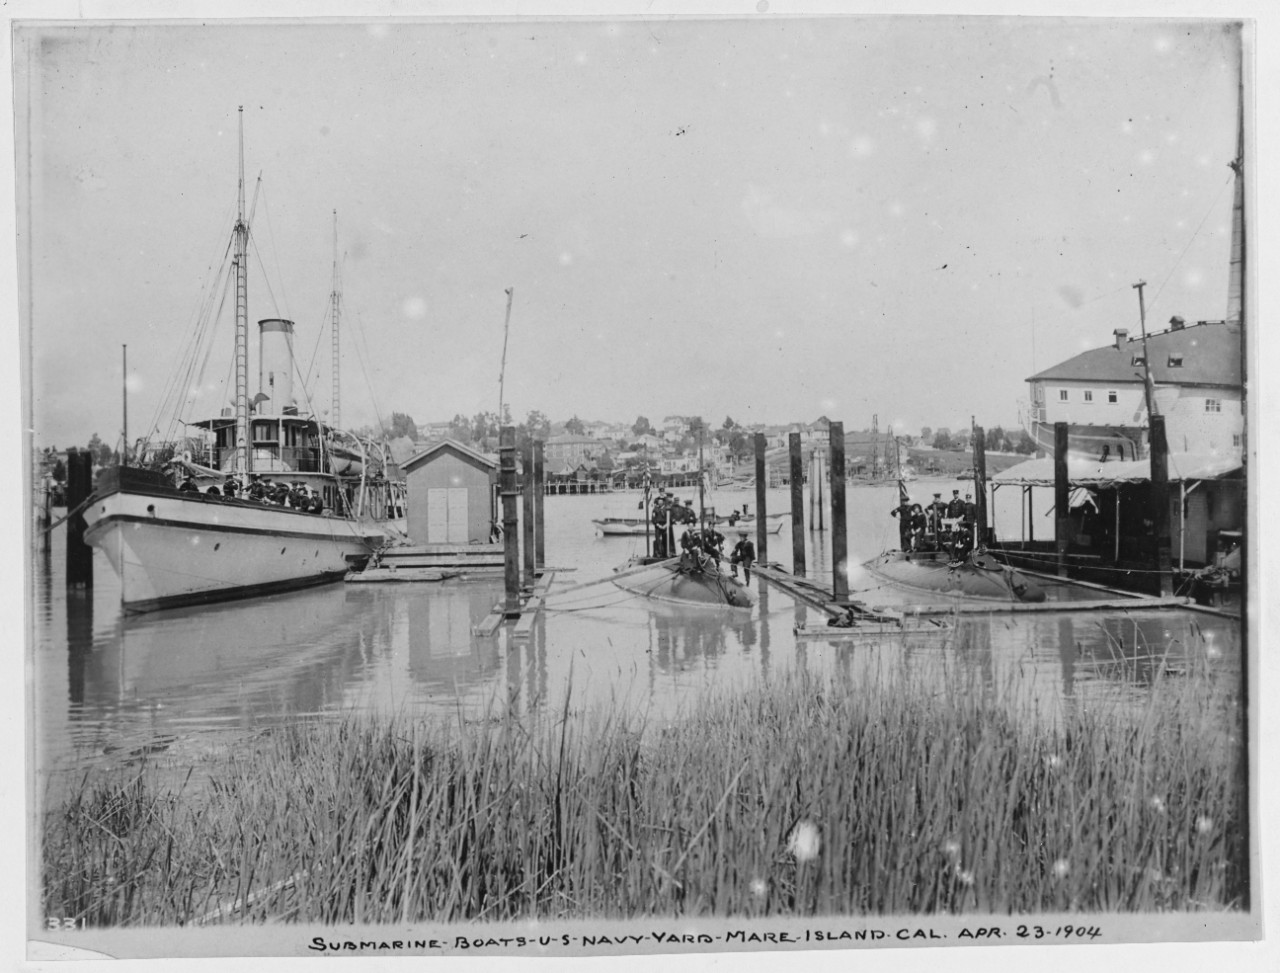 Submarine boats, U. S. Navy Yard, Mare Island, California,  23 April 1904.